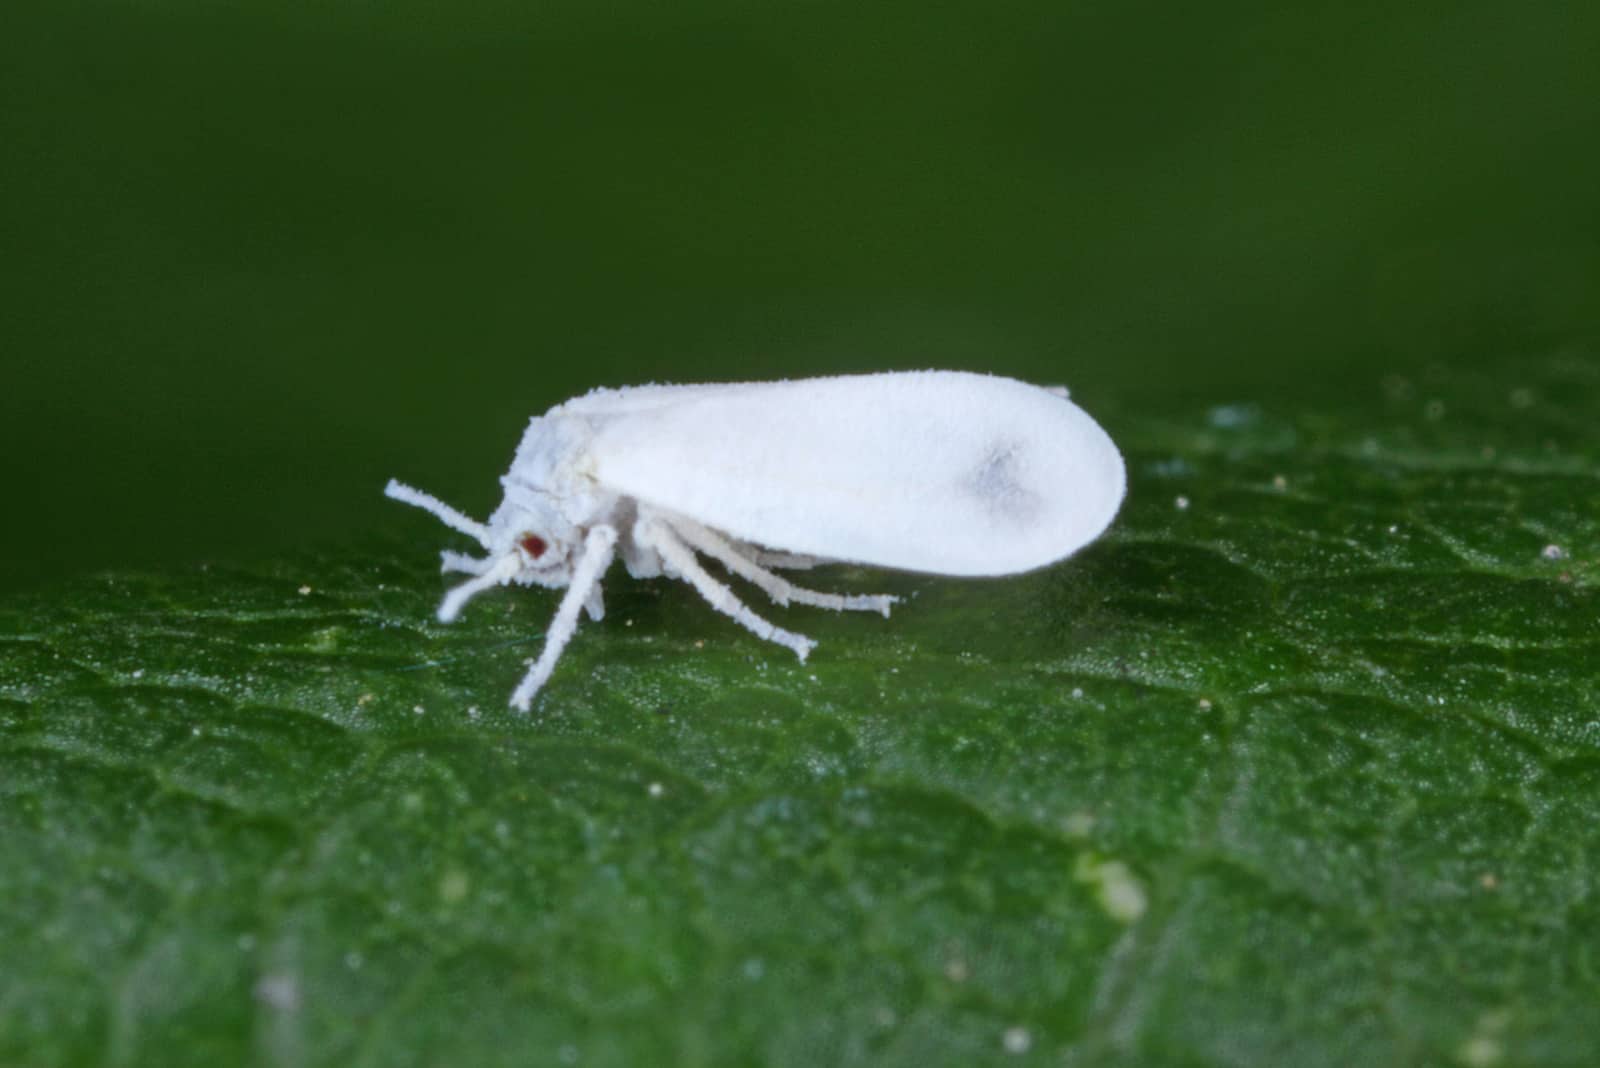 Whitefly pest on a leaf